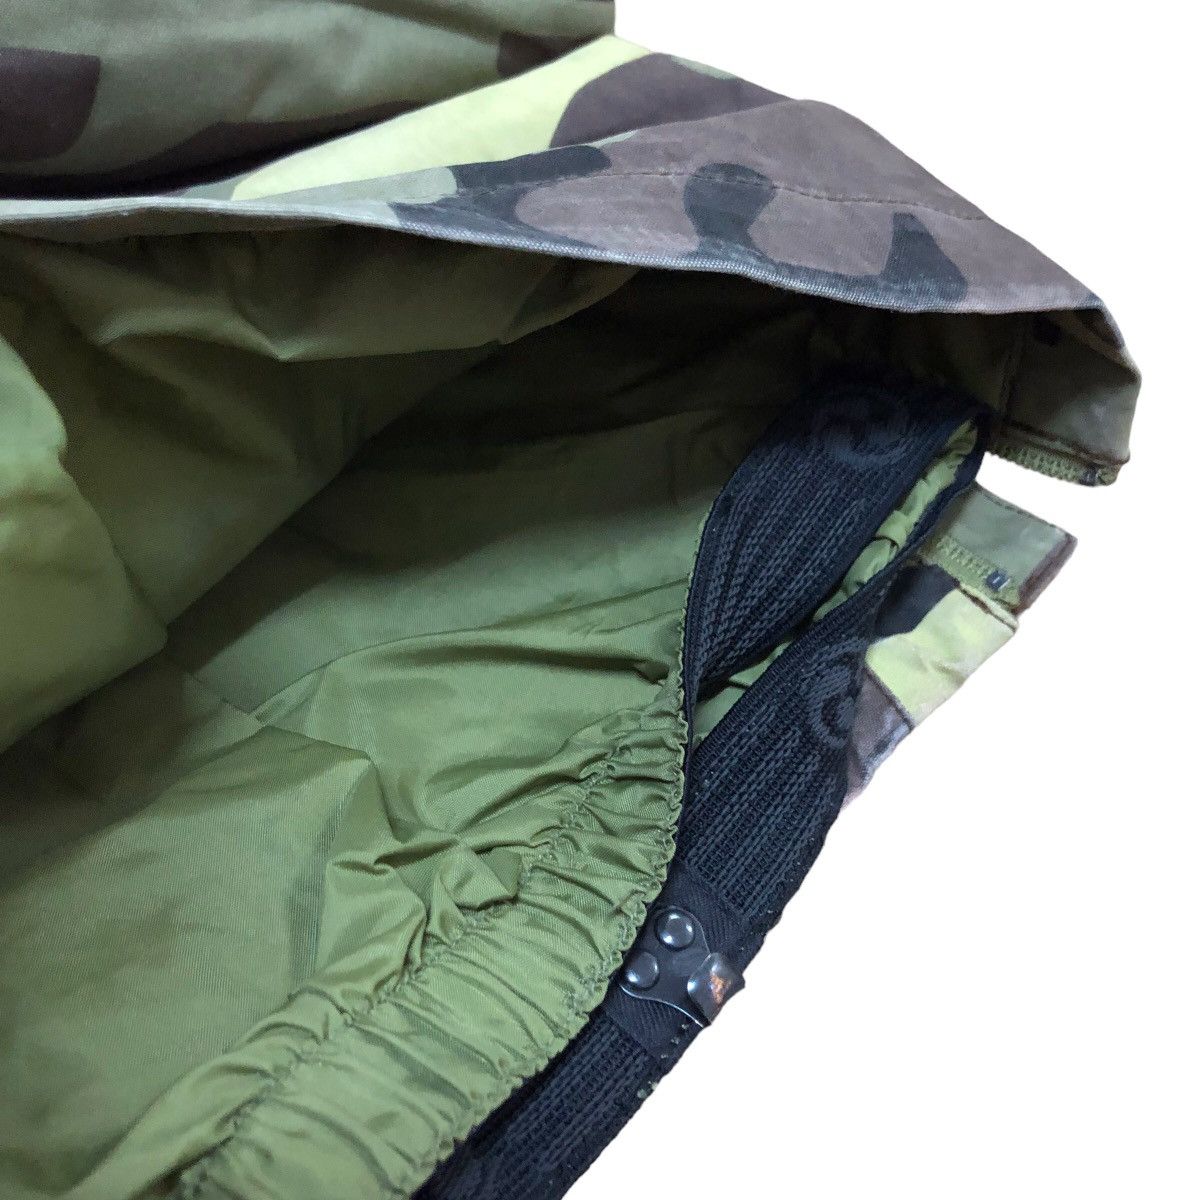 Ronin burton dryride outerwear camouflage snowboard pants - 7